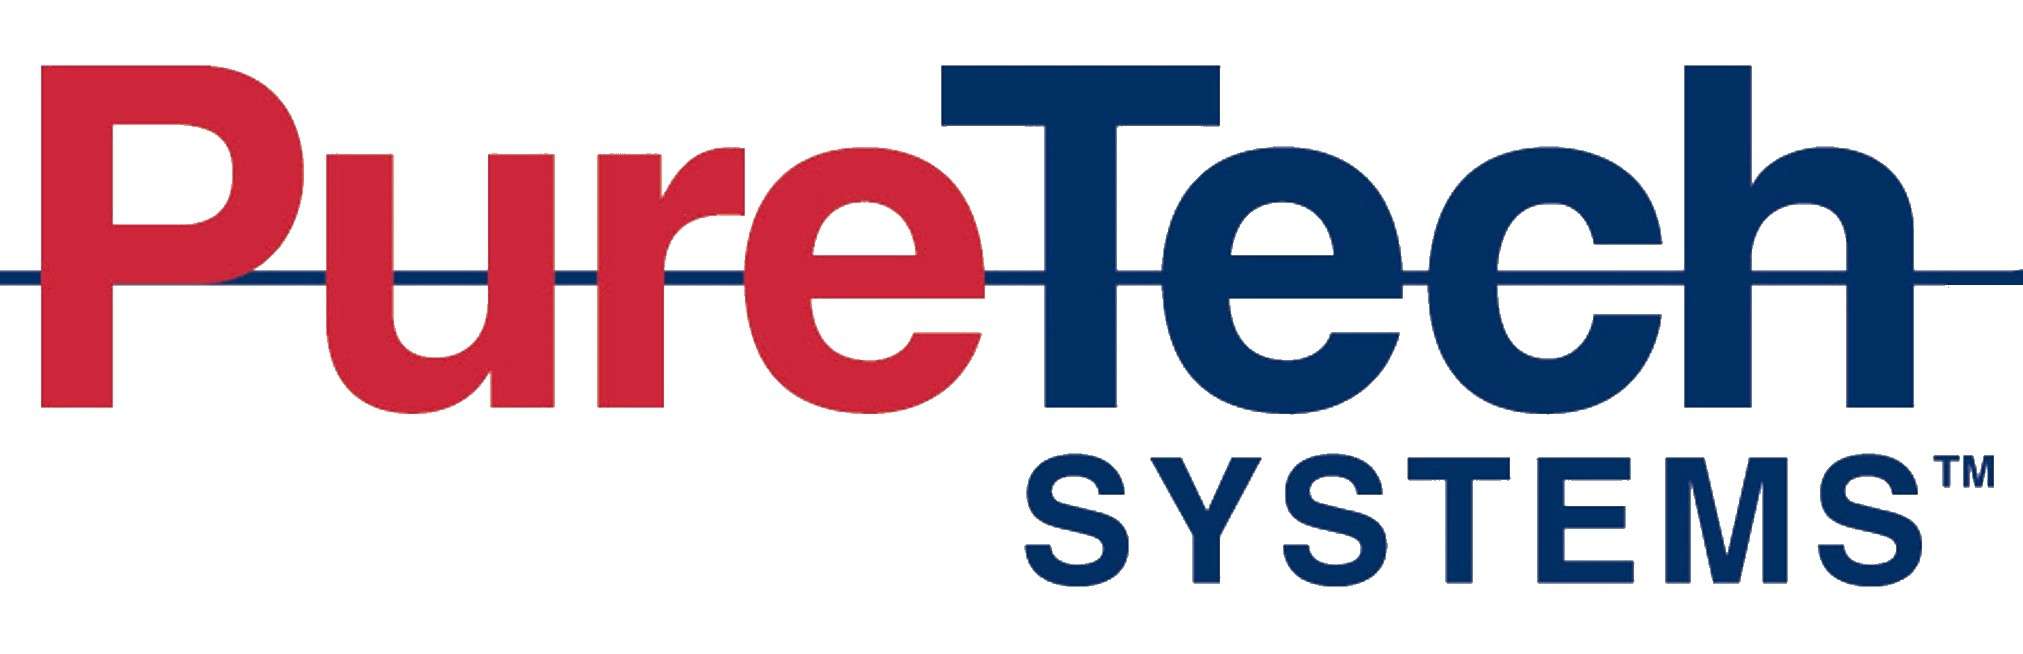 PureTech Systems, Inc.